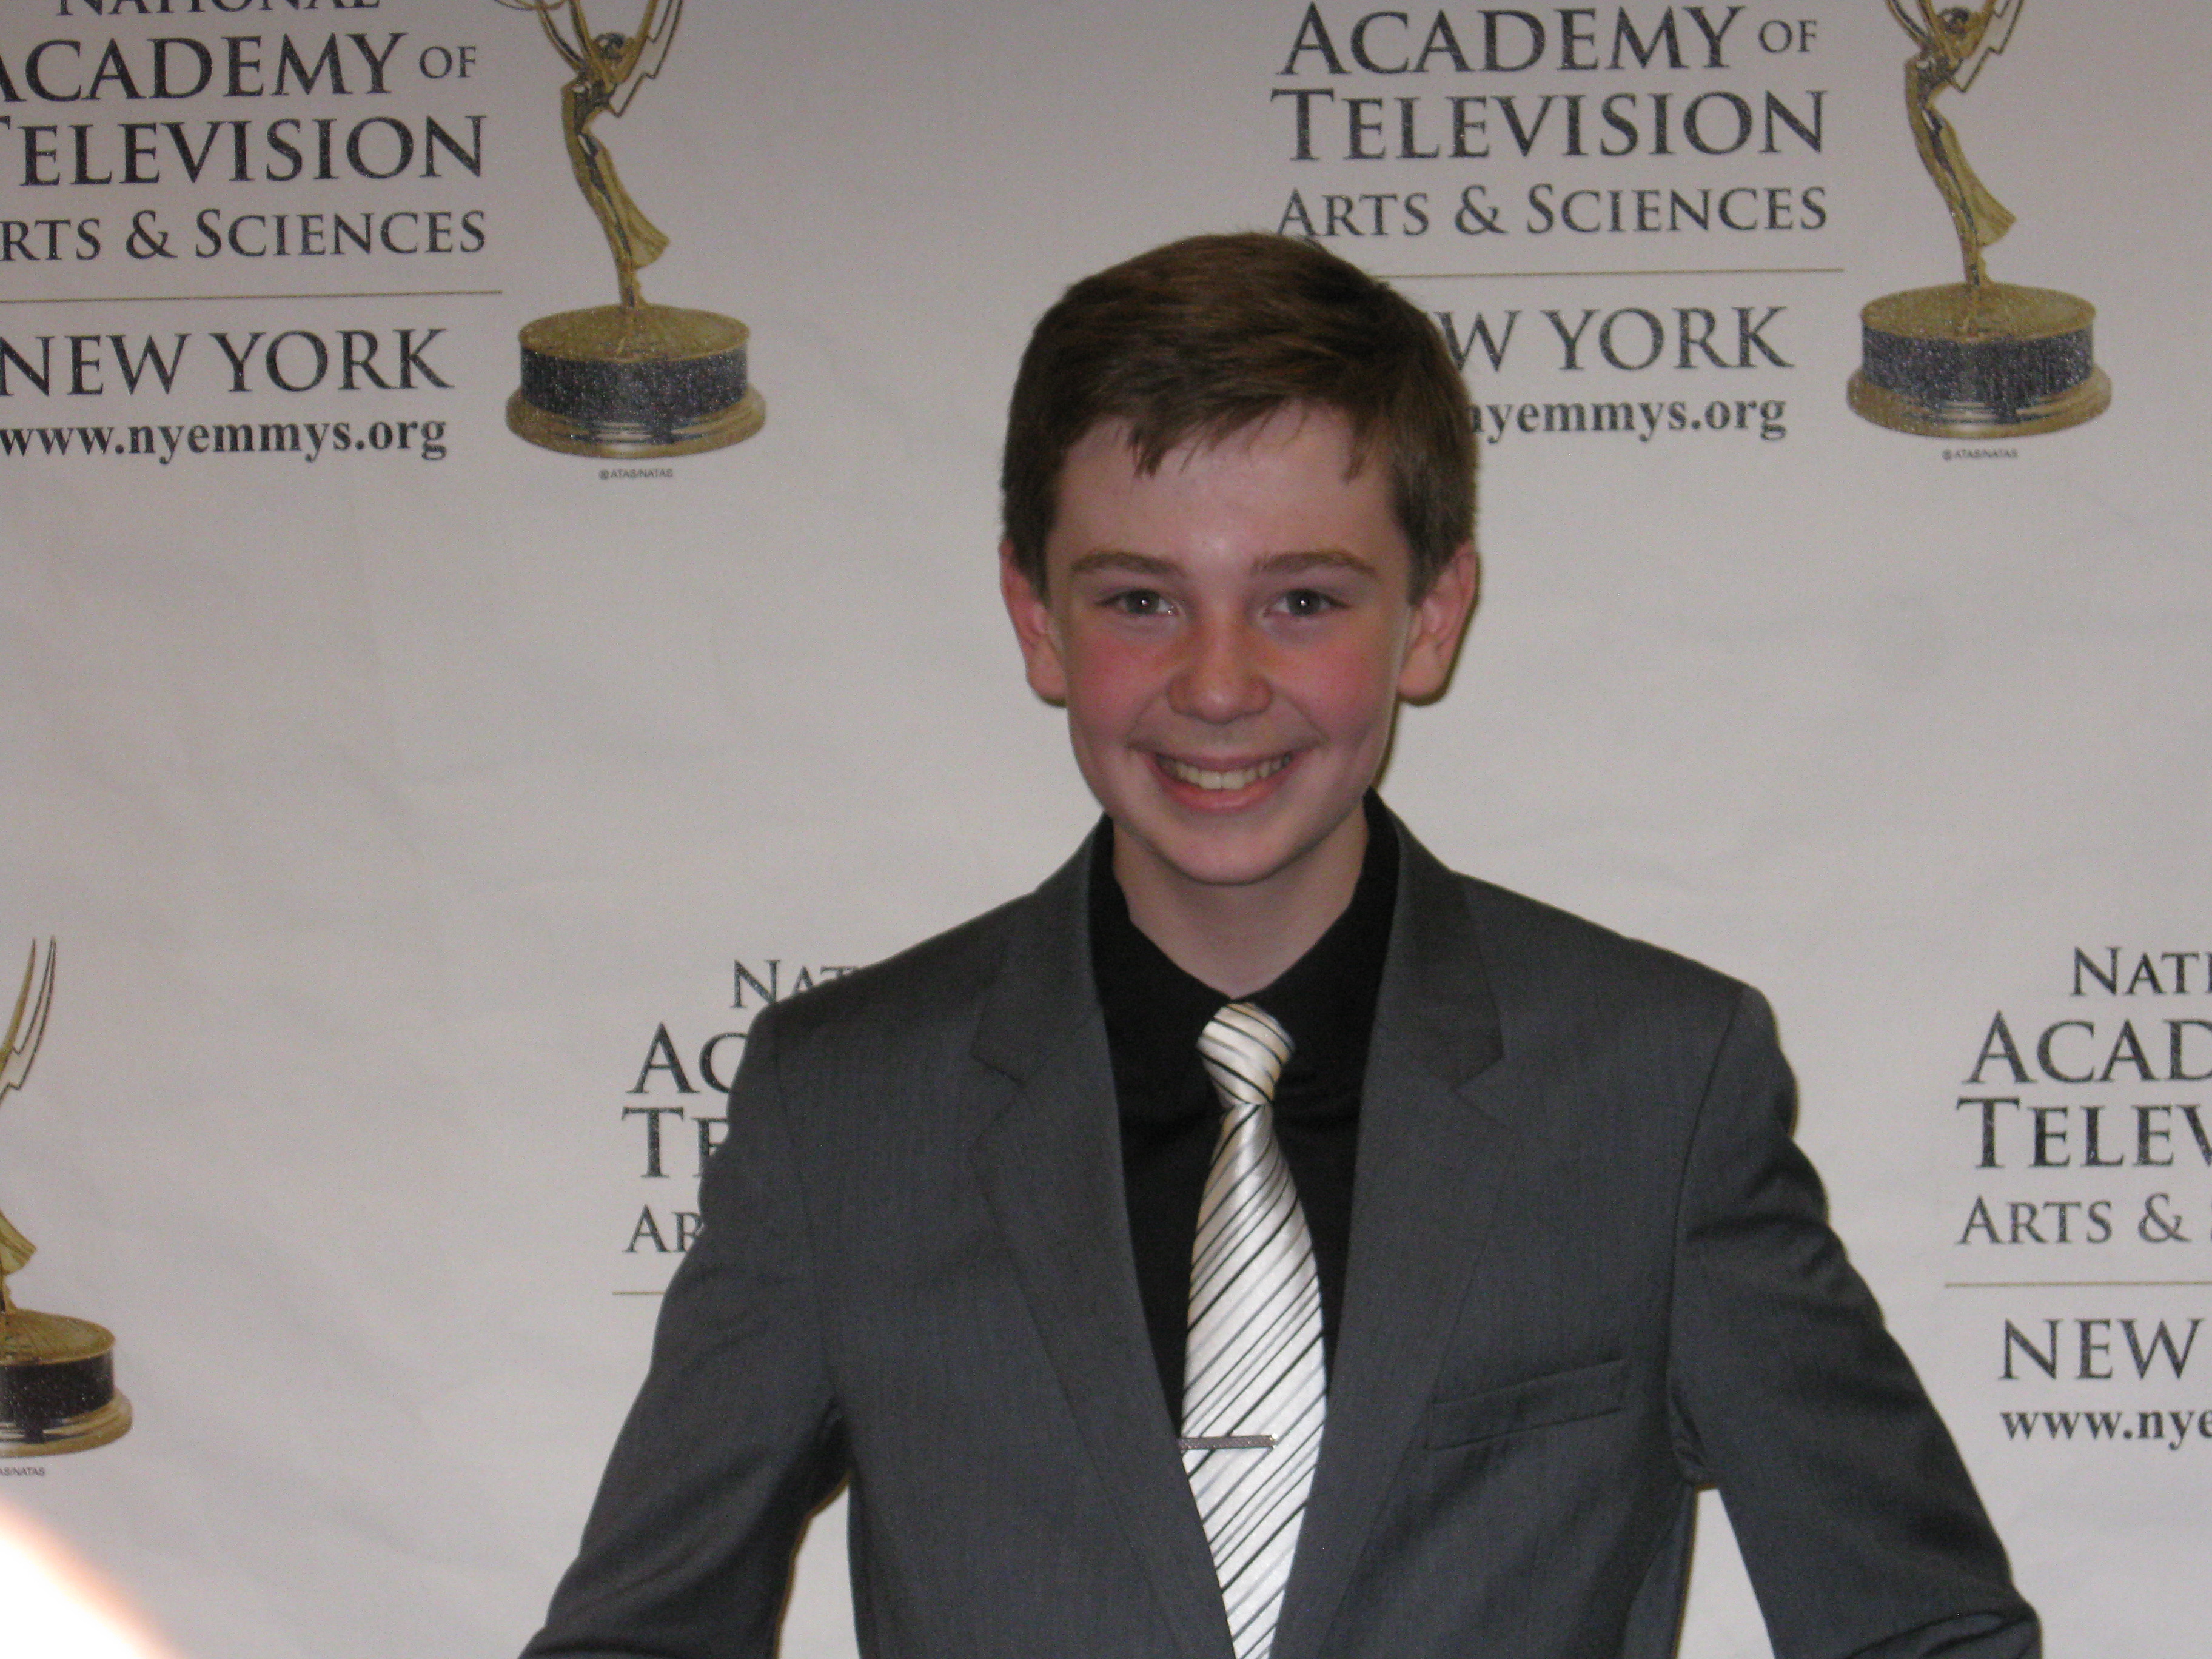 Presenting at NY Emmy Awards, NYC - 4/1/12